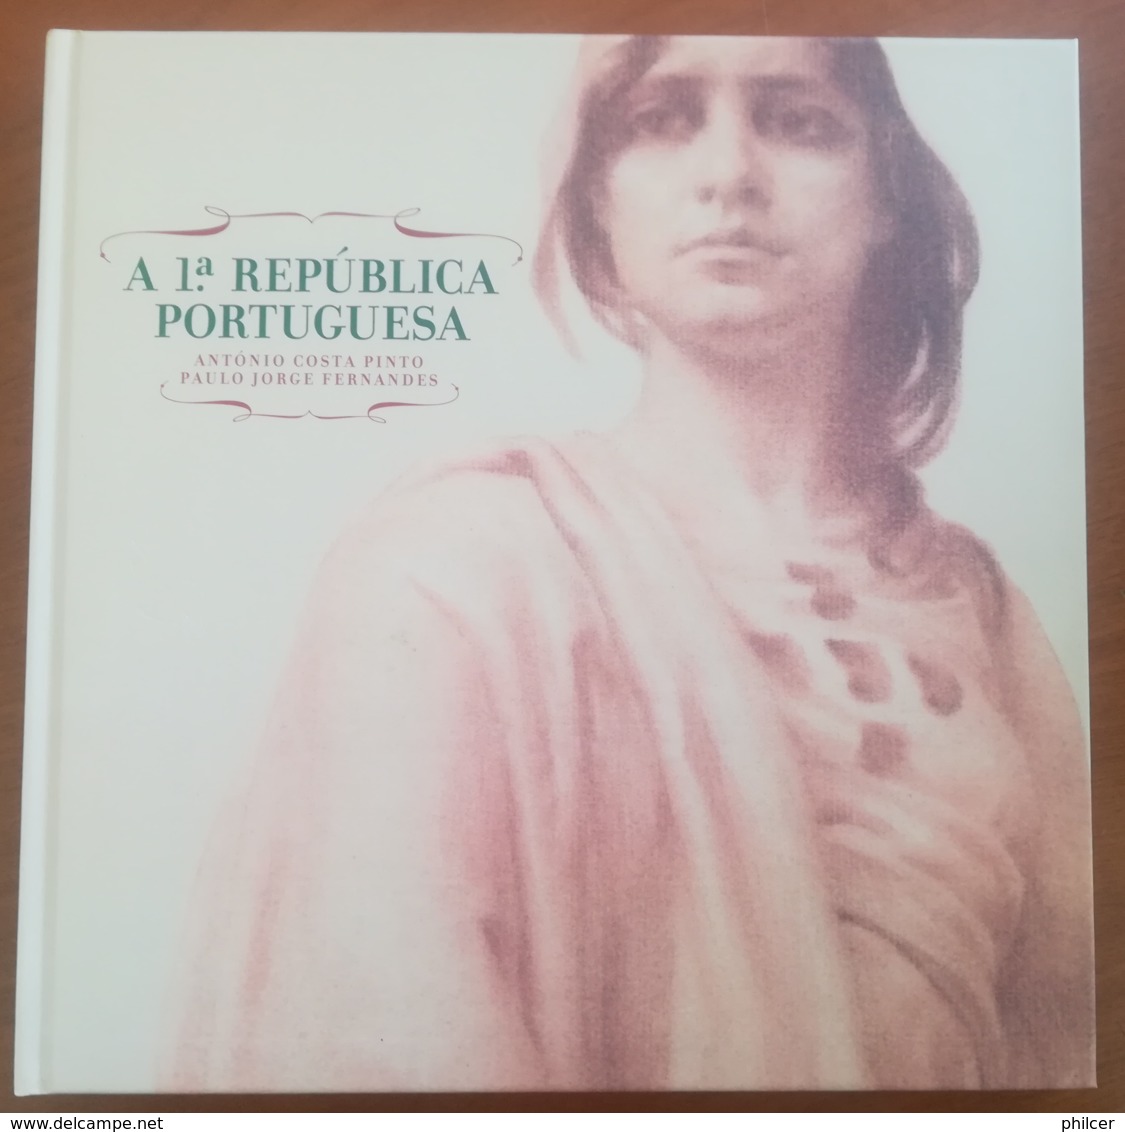 Portugal, 2010, # 88, A 1ª República Portuguesa - Book Of The Year